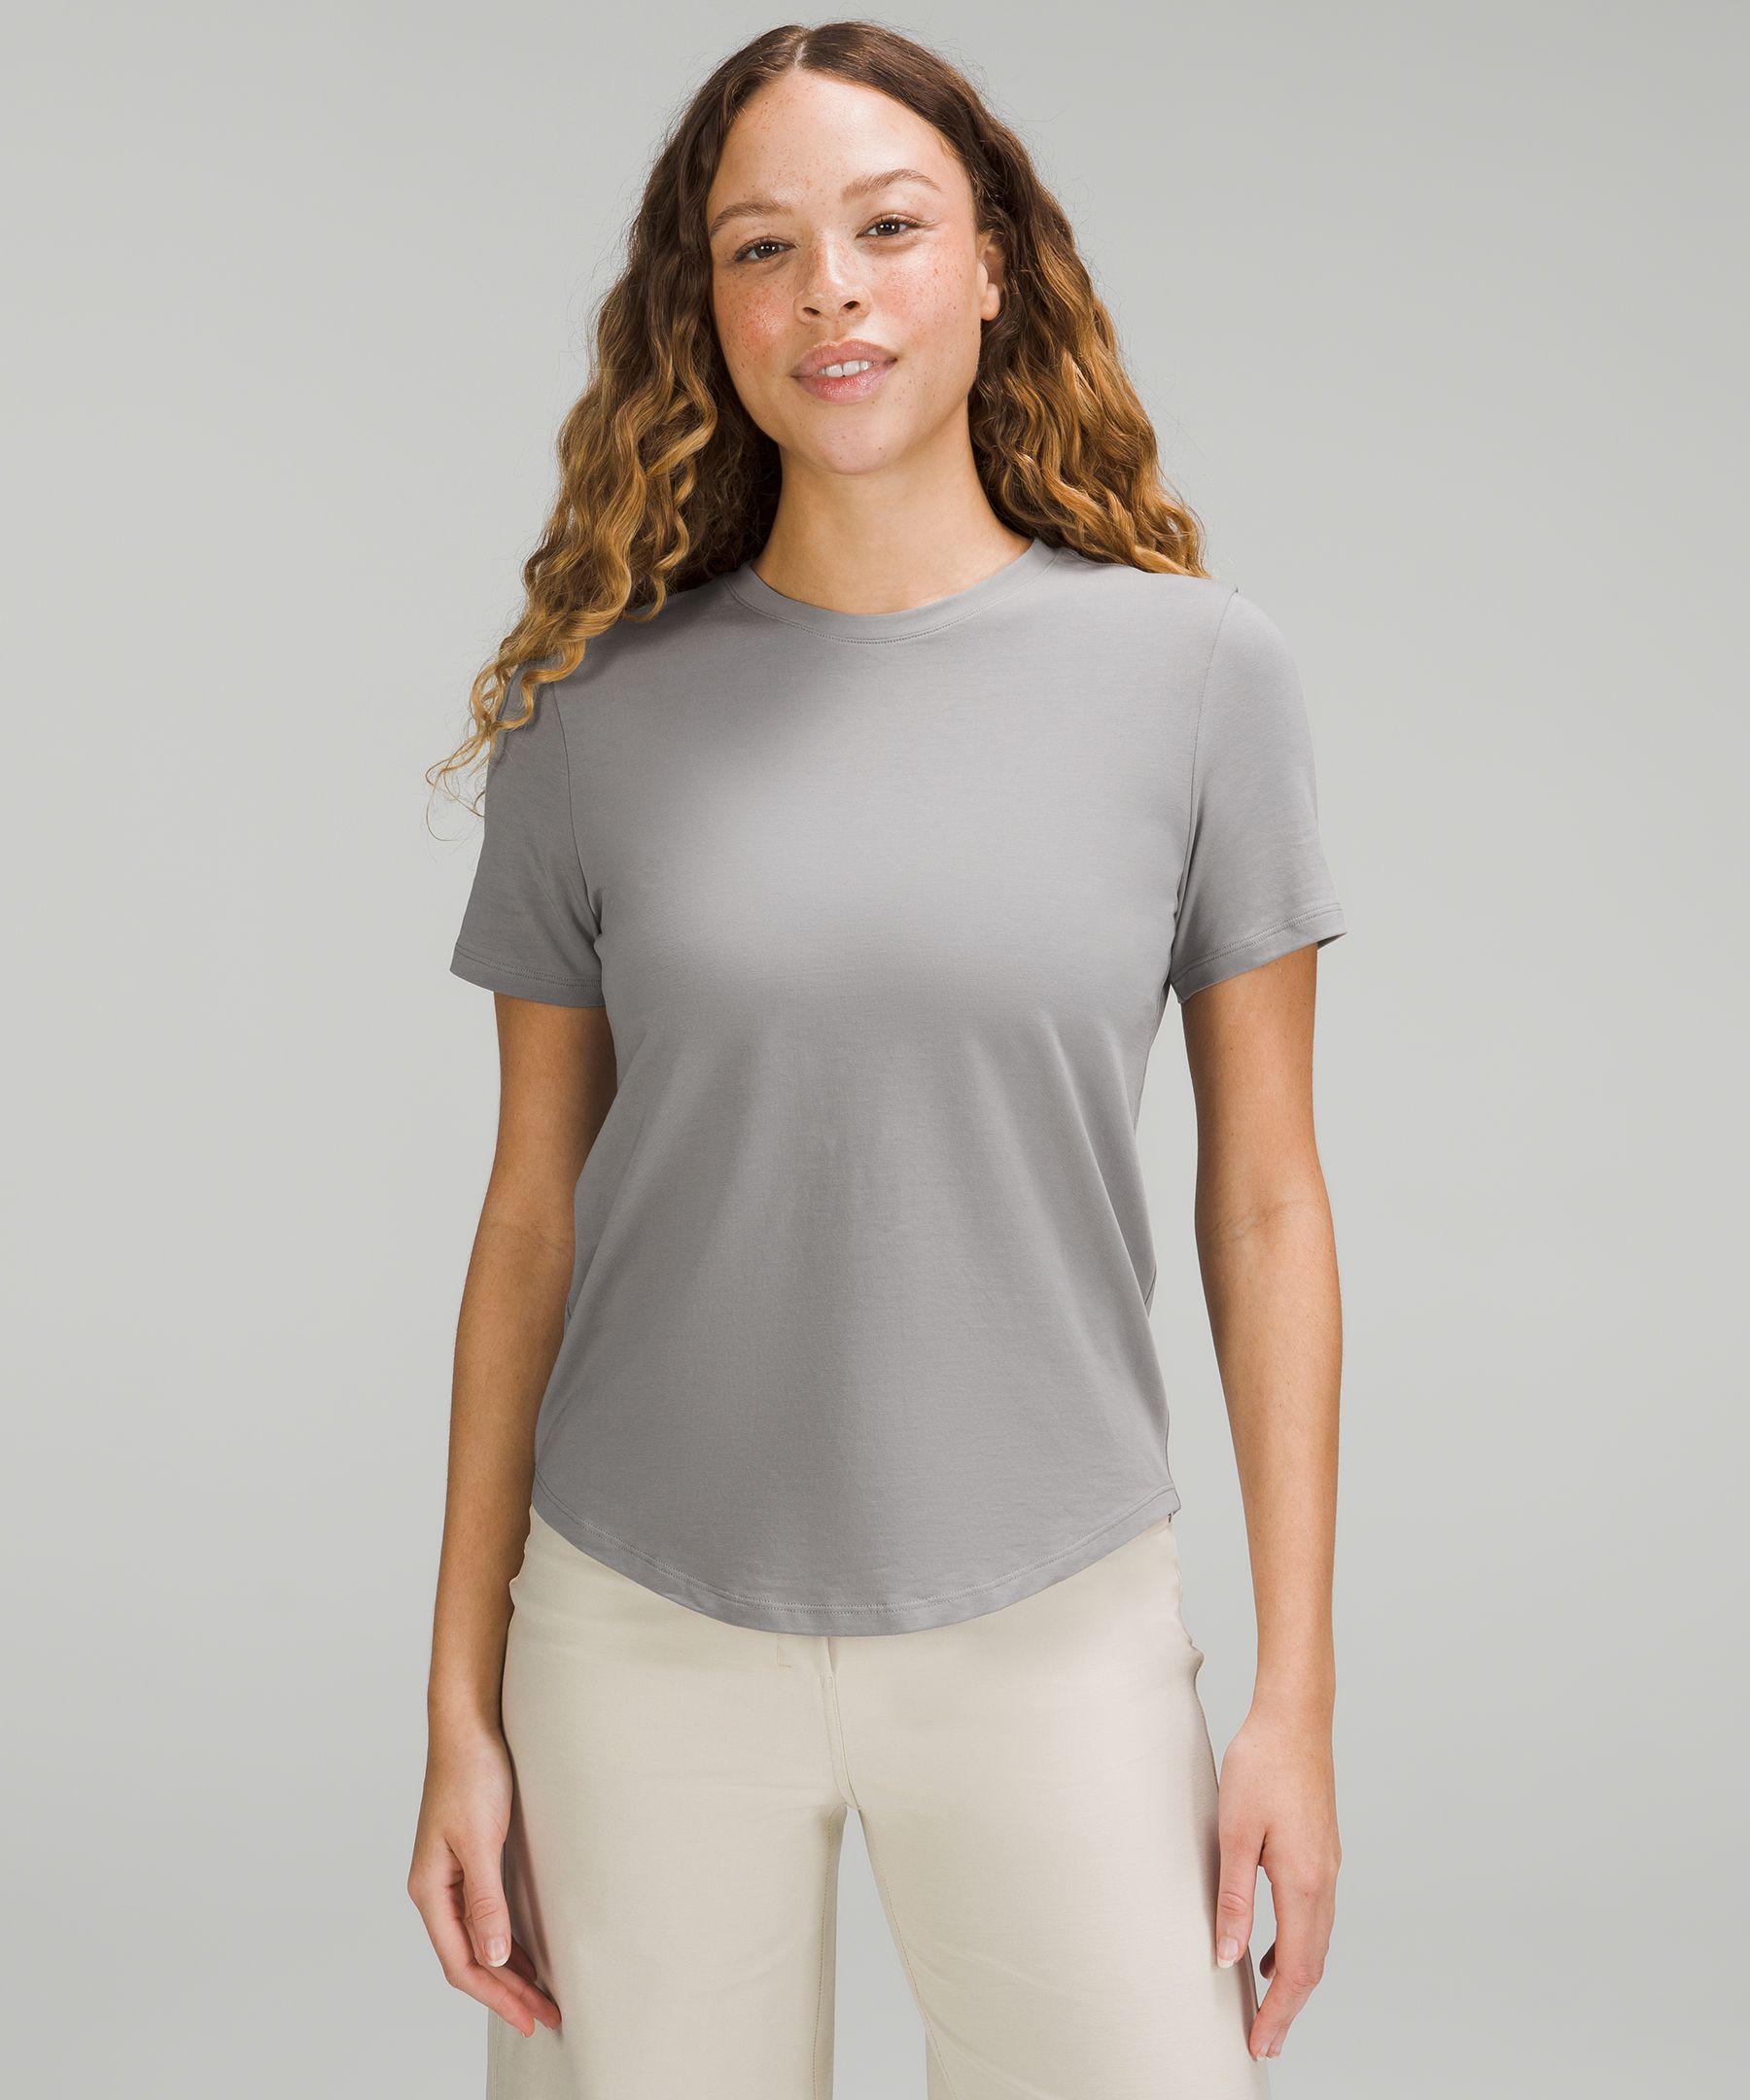 Women Criss Cross T-Shirt Summer Tops O Neck Short Sleeve Casual Blouse Off Shoulder Trendy Clothes Tee Shirts Tshirts 